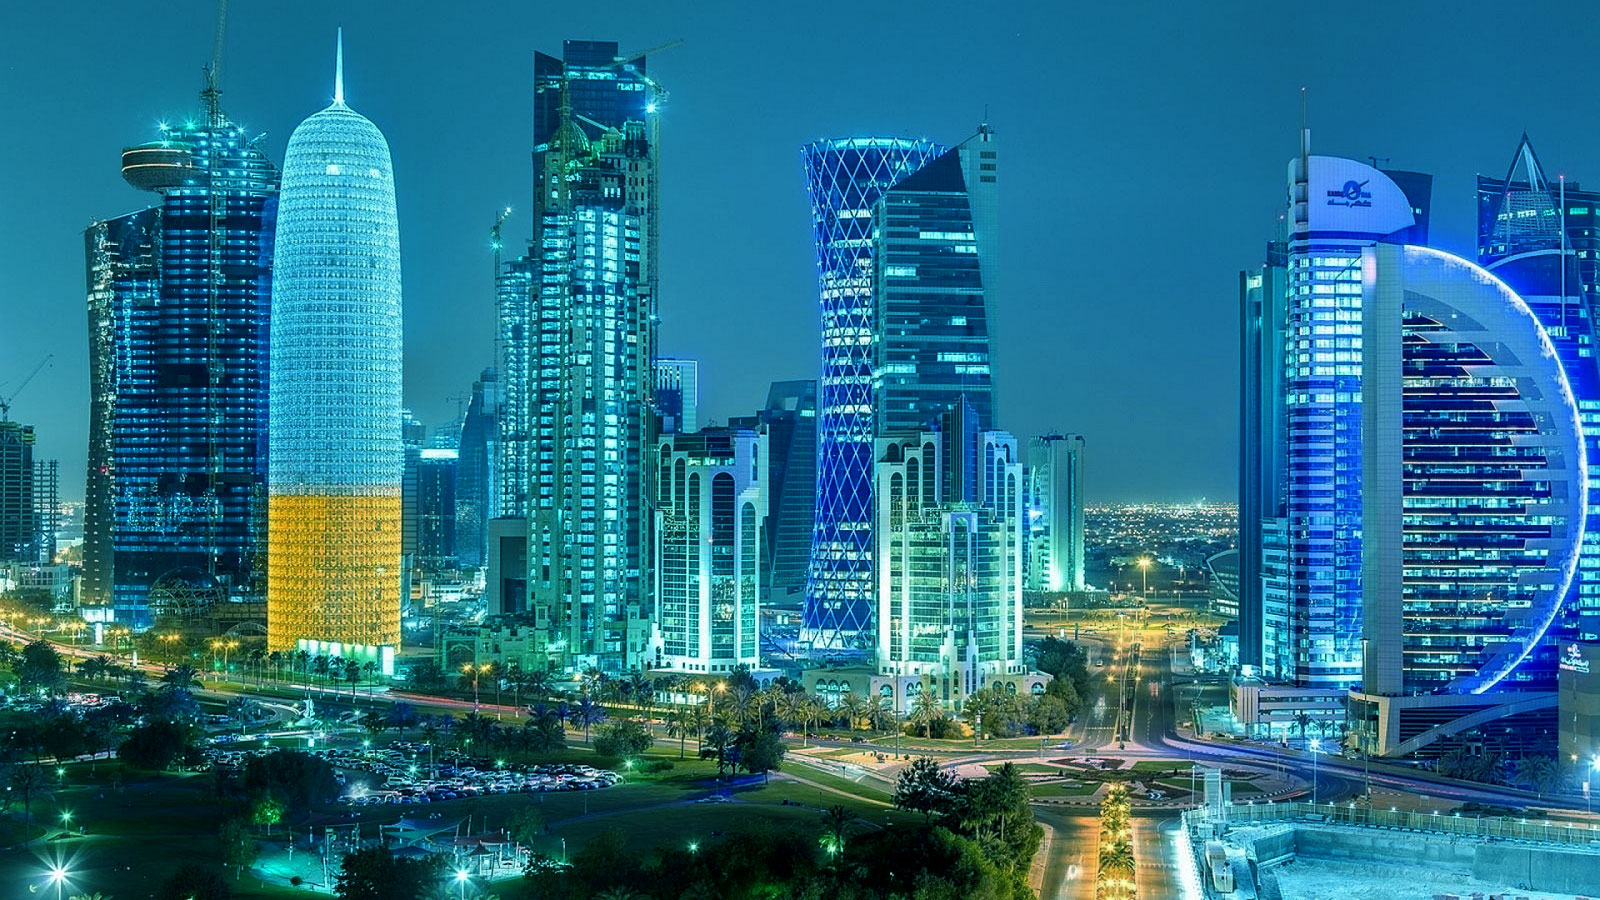 qatar capitale